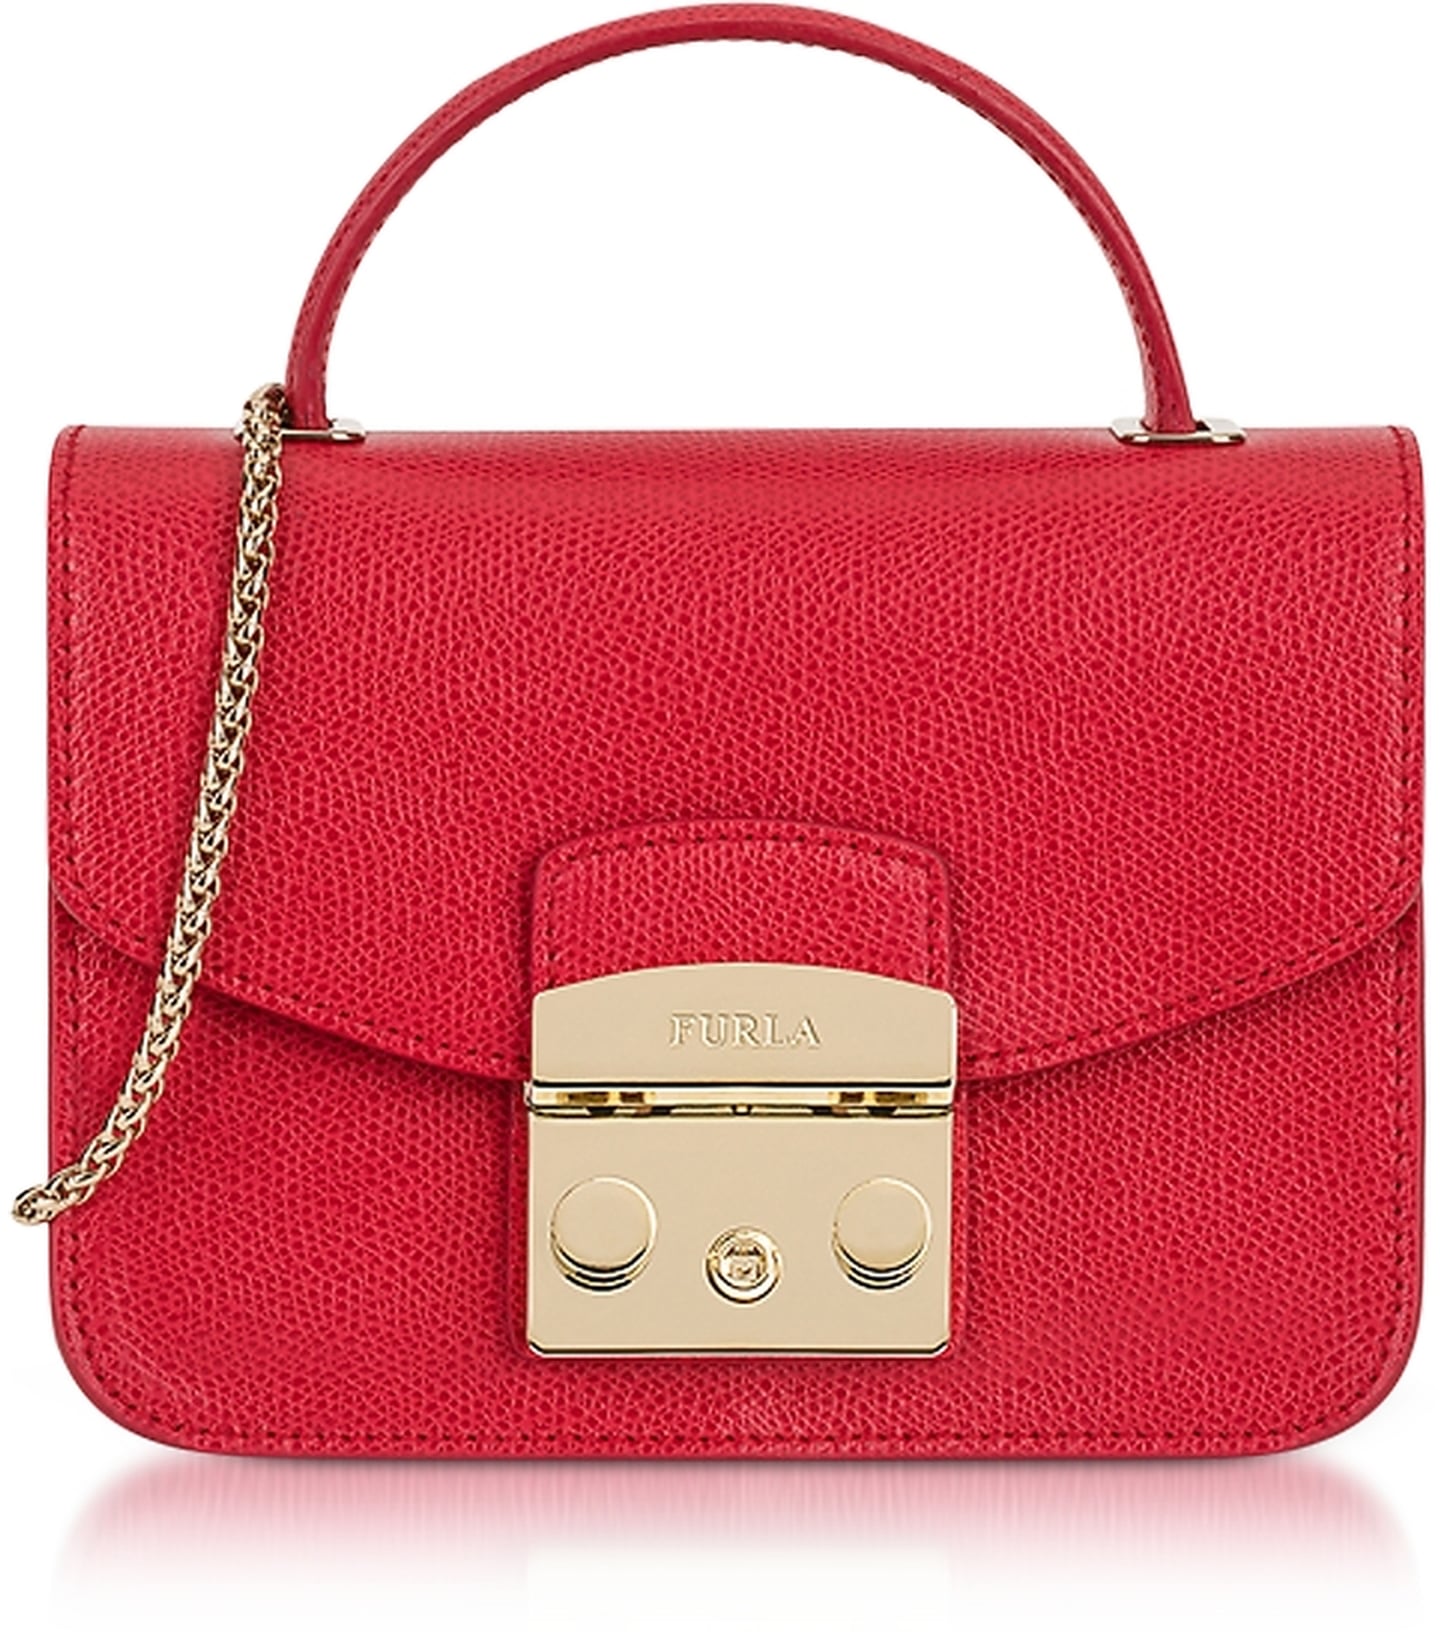 Queen Rania's Red Givenchy Bag | POPSUGAR Fashion